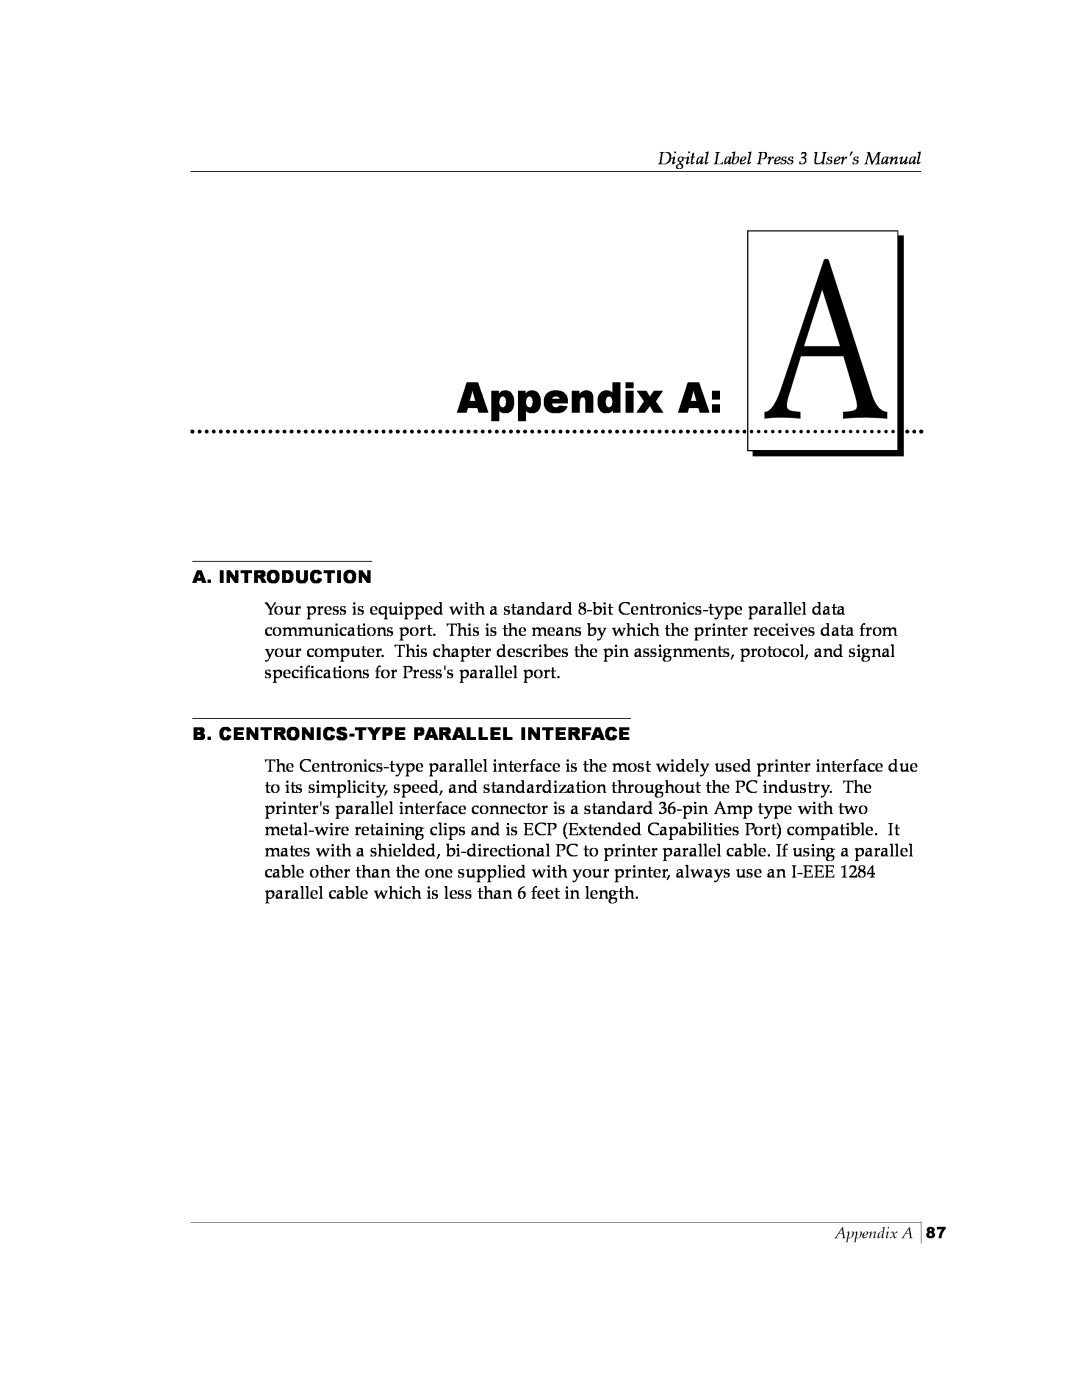 Primera Technology 510212 manual Appendix A, B. Centronics-Type Parallel Interface, Digital Label Press 3 User’s Manual 